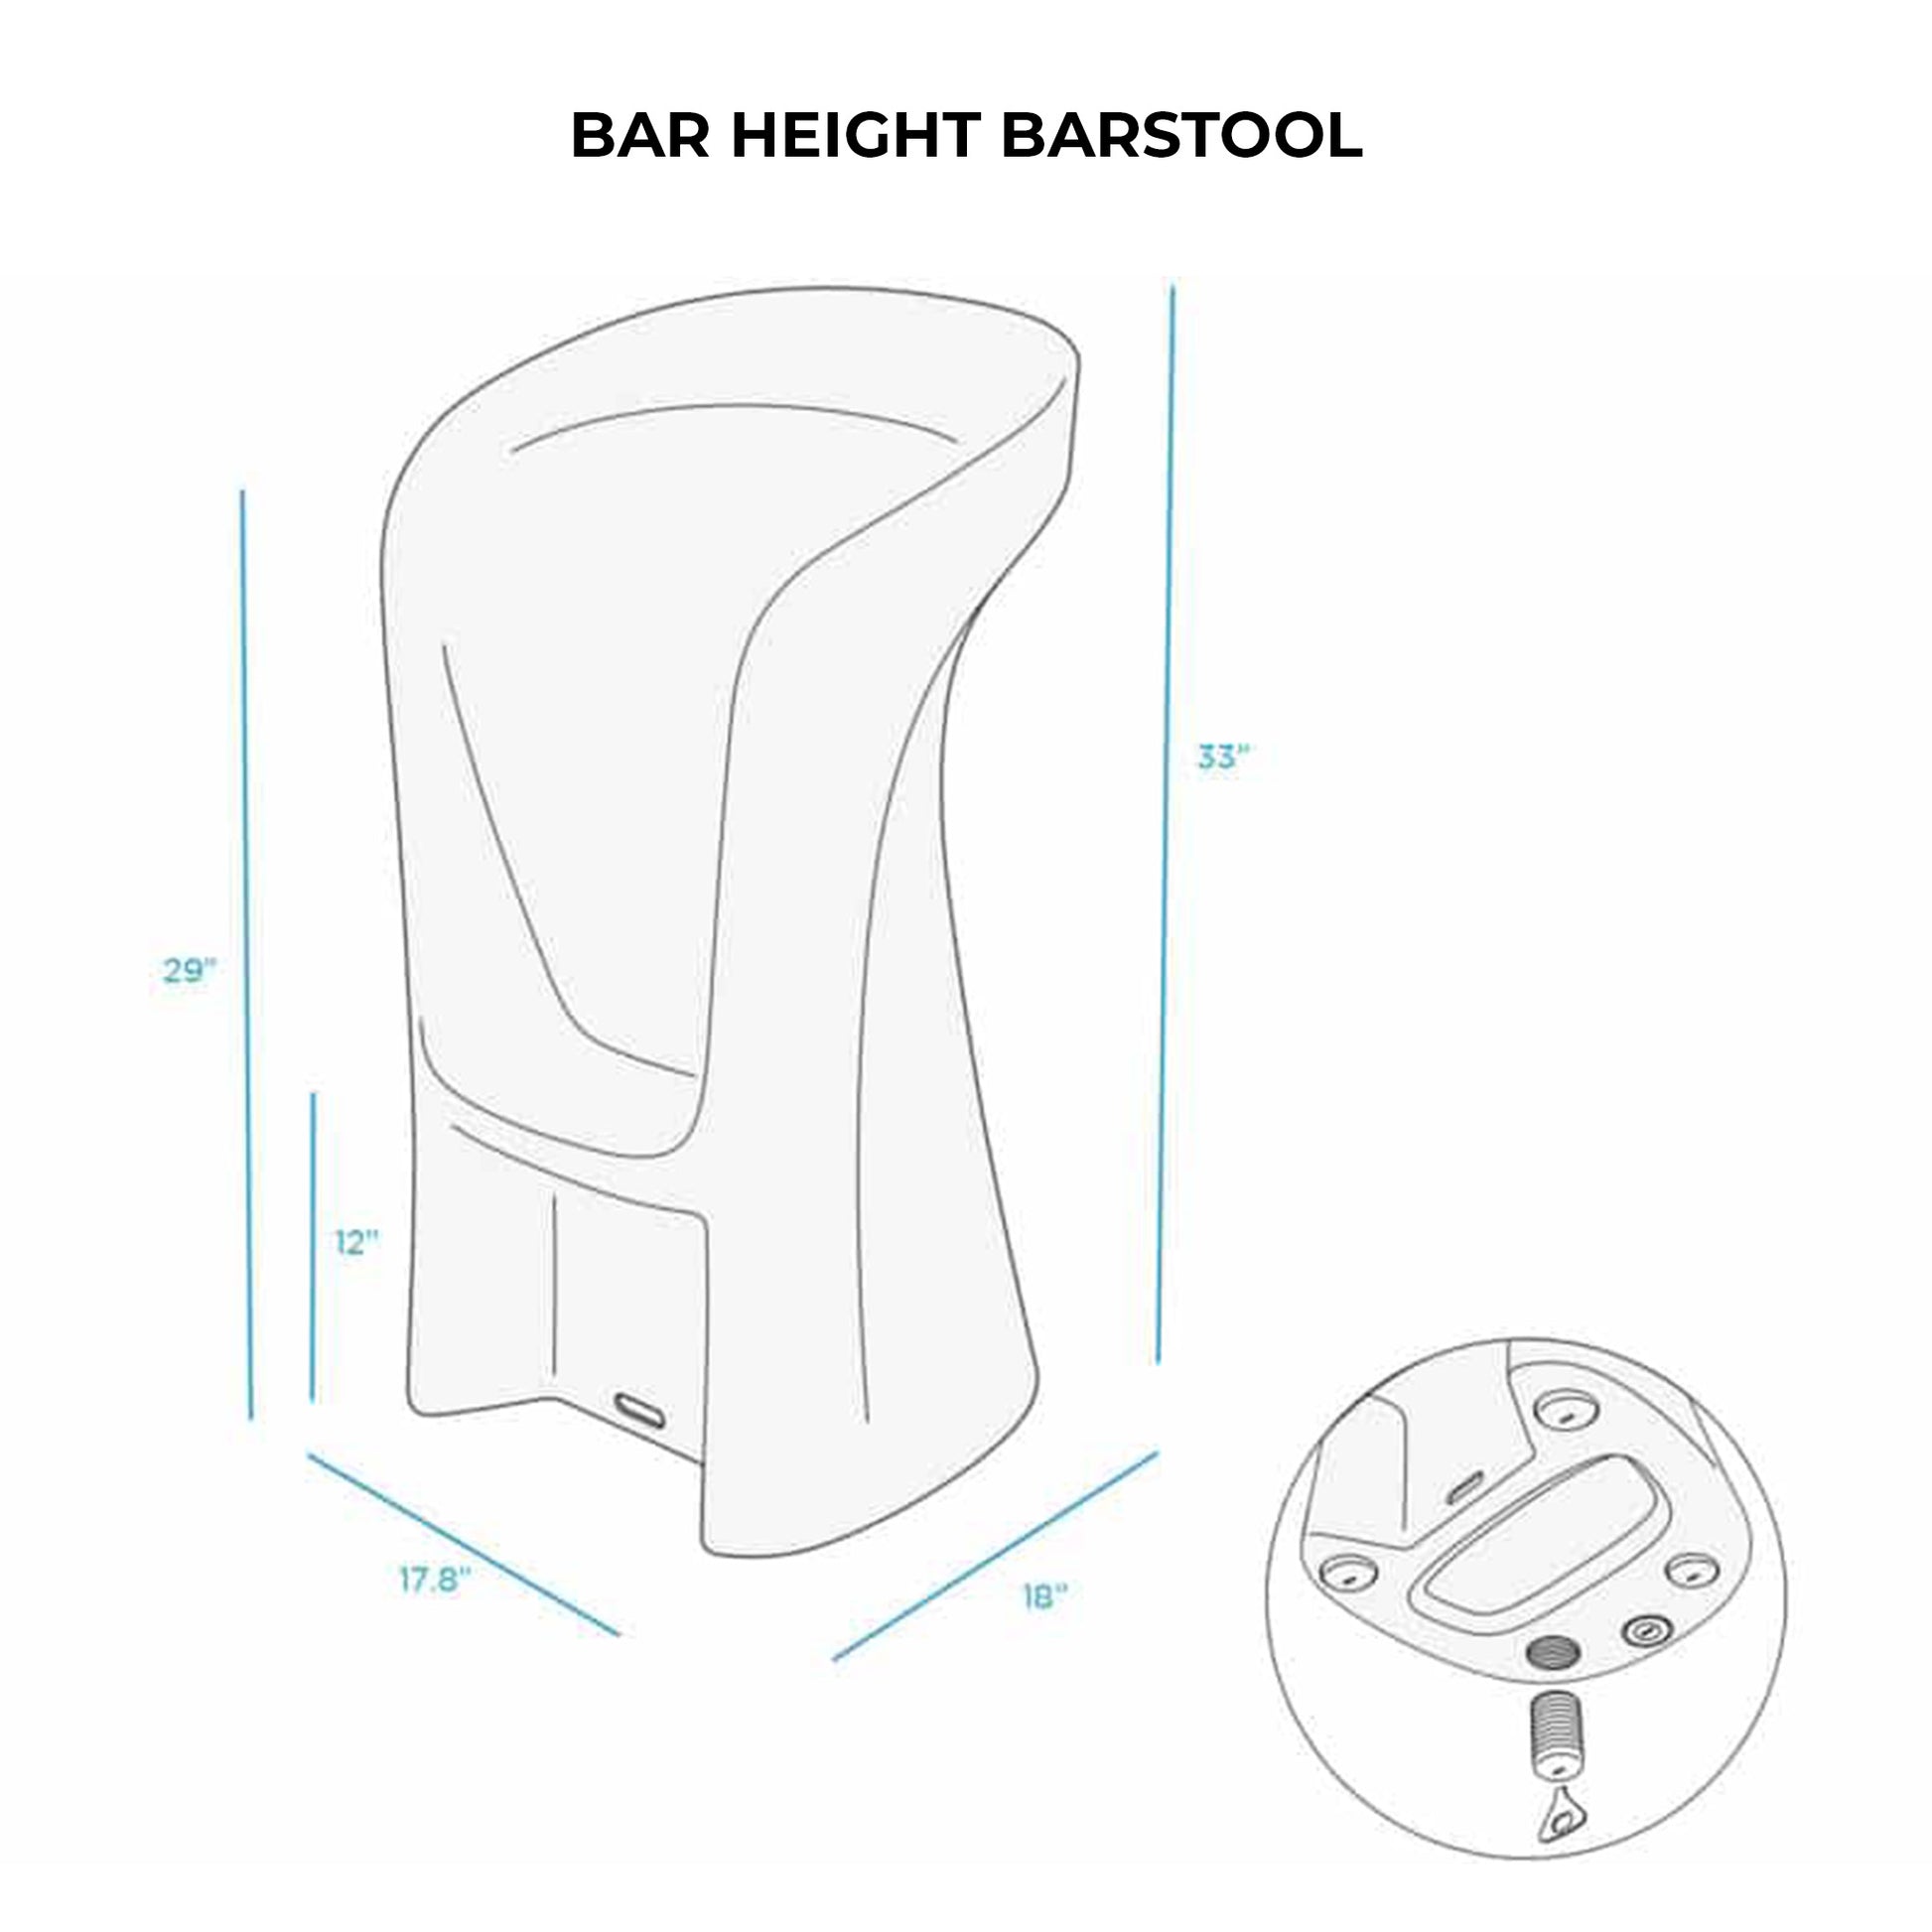 Ledge Lounger Signature Barstool - bar height dimensions